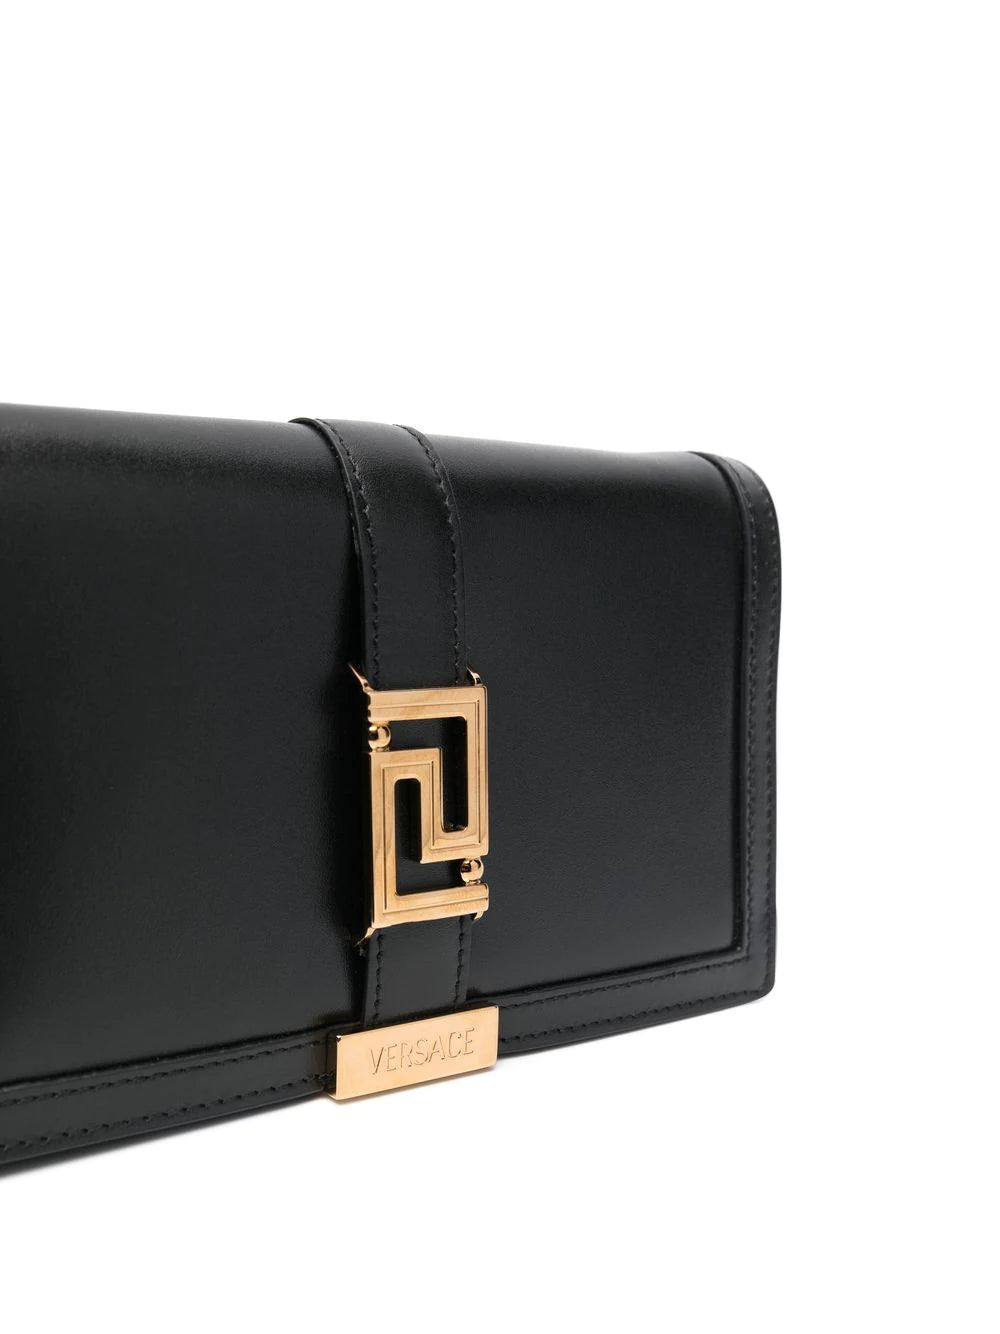 Versace Black with Gold Leather Greca Goddess Mini Bag